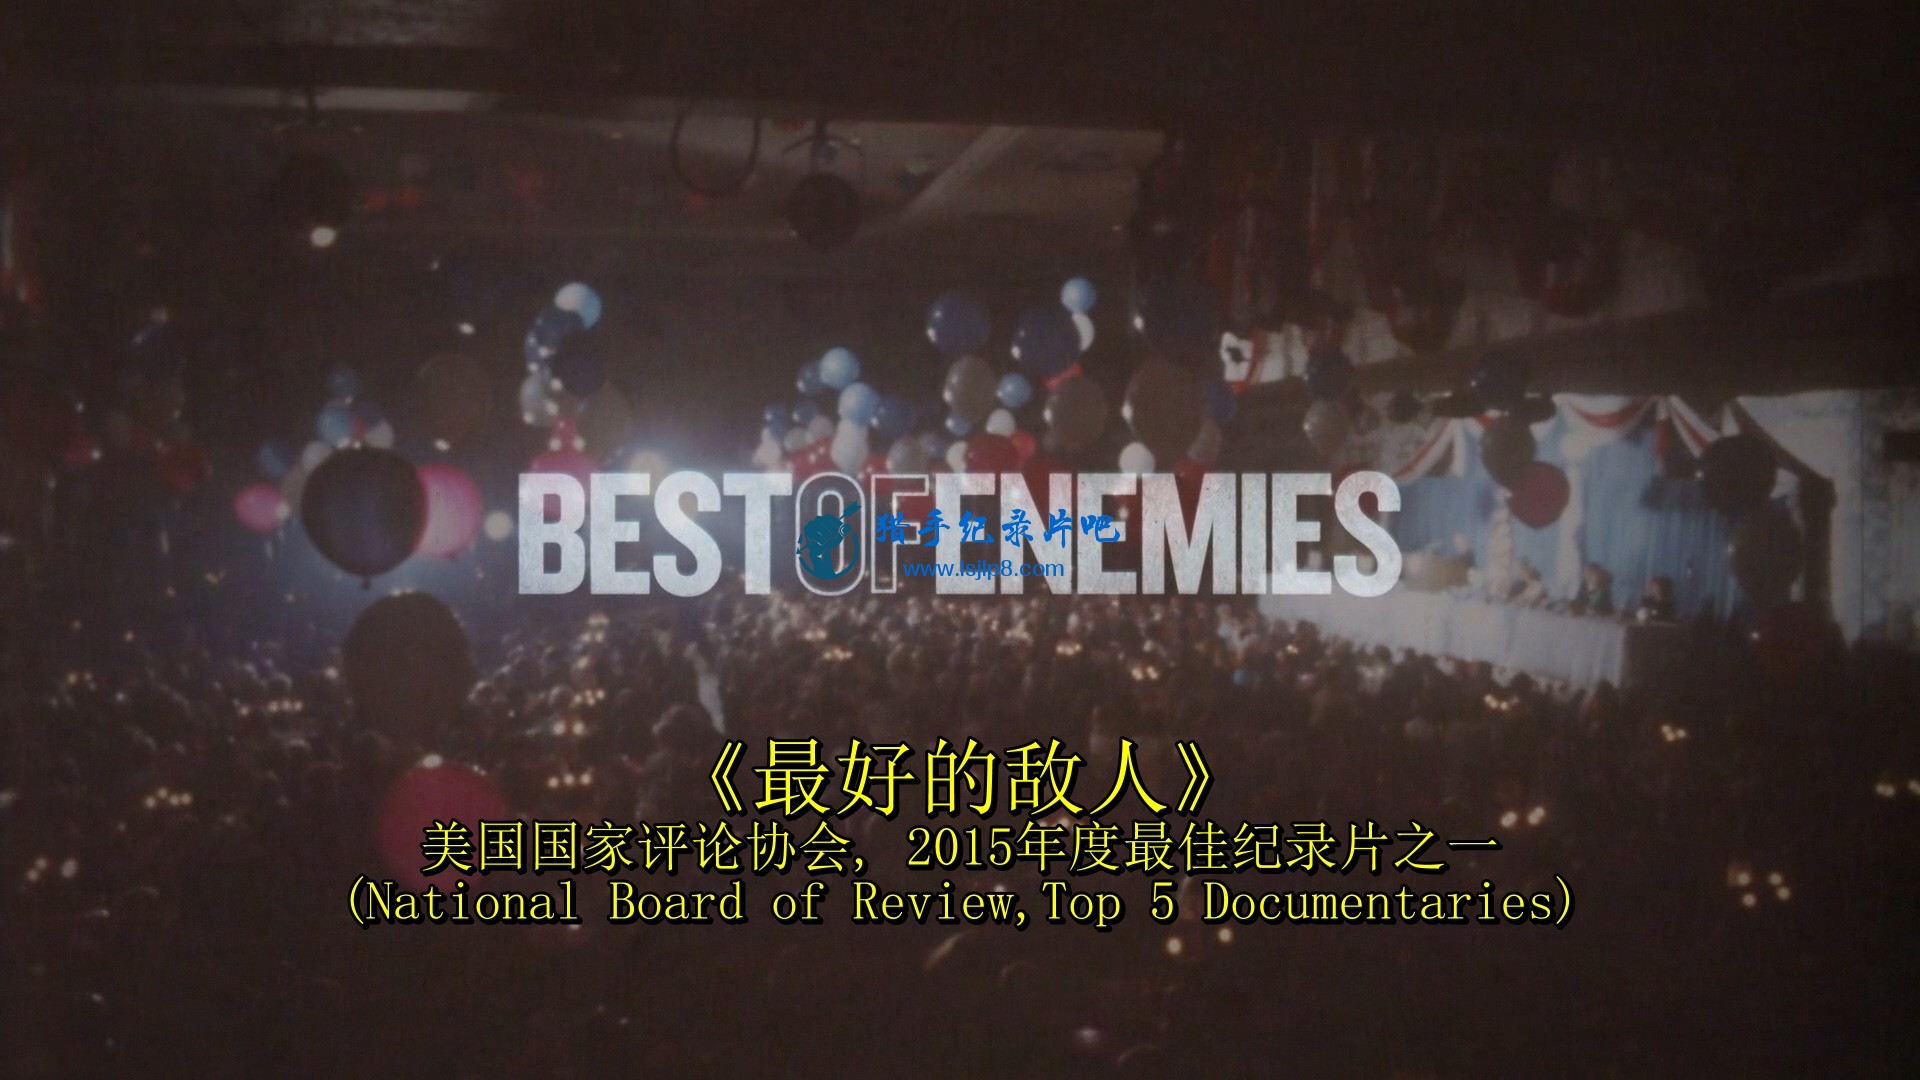 best.of.enemies.2015.docu.1080p.bluray.x264-psychd.mkv_20210818_103910.387.jpg